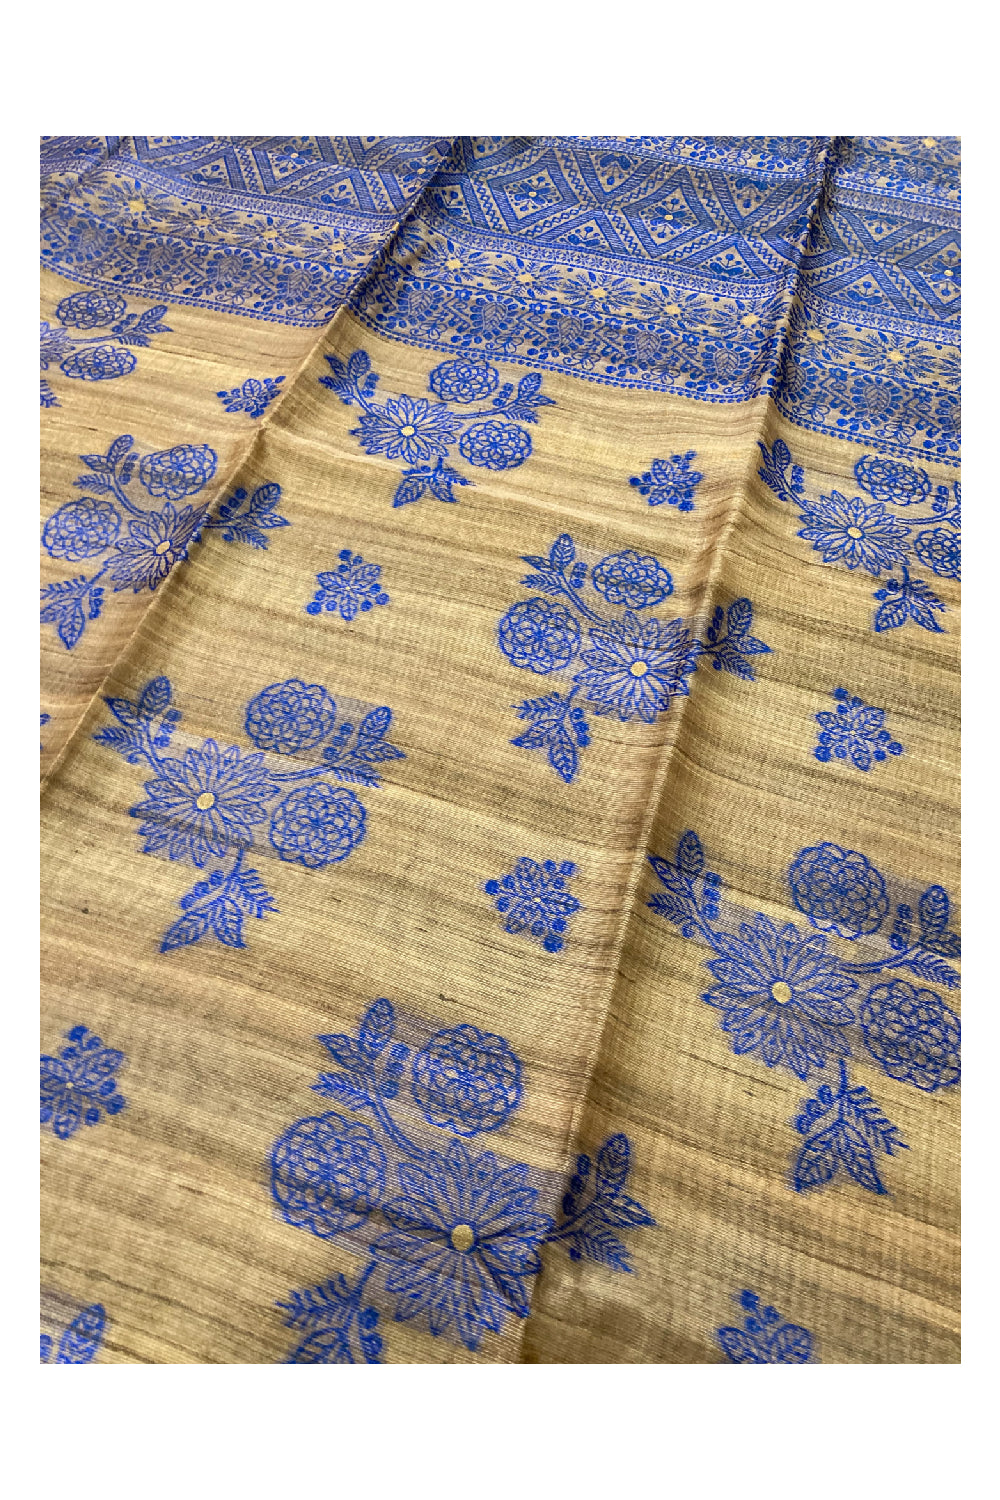 Southloom Semi Tussar Blue Floral Print on Grey Designer Saree and Blue Pallu